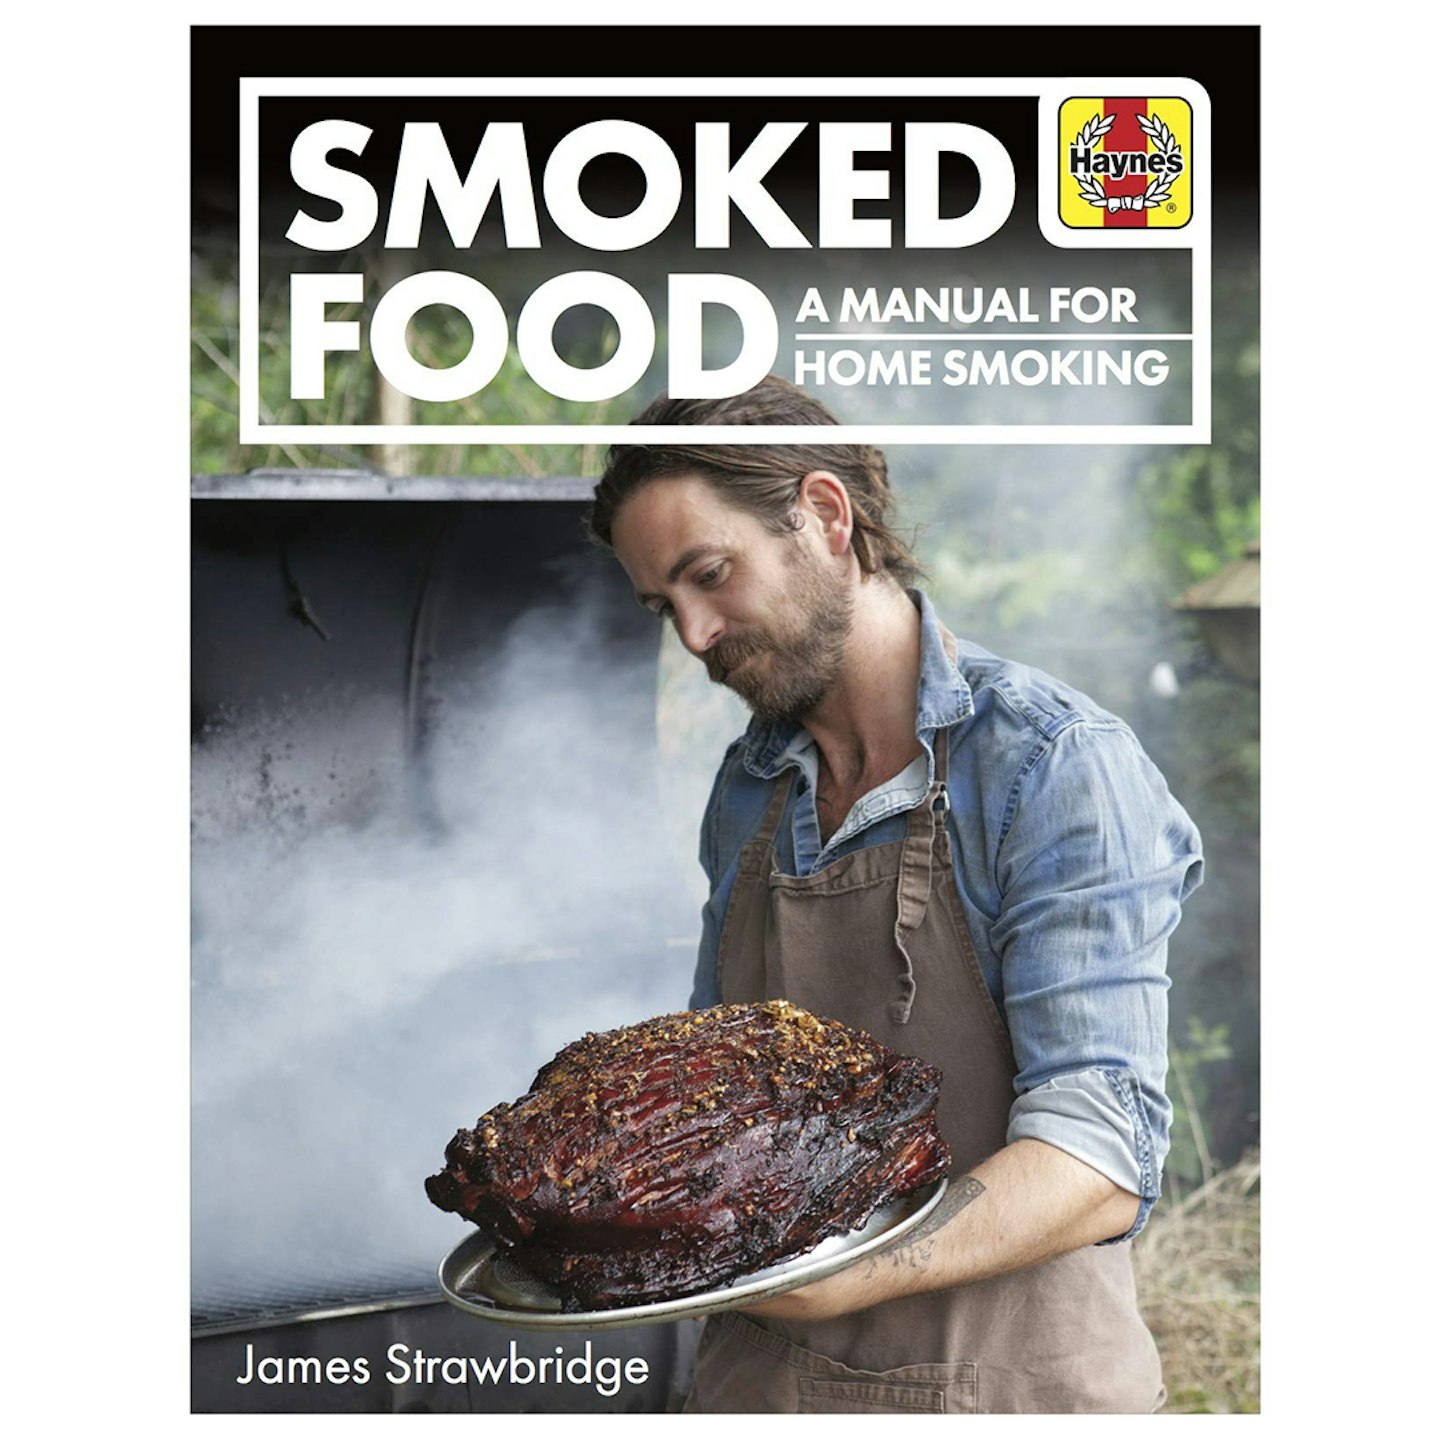 Smoked Food: A Manual for Home Smoking